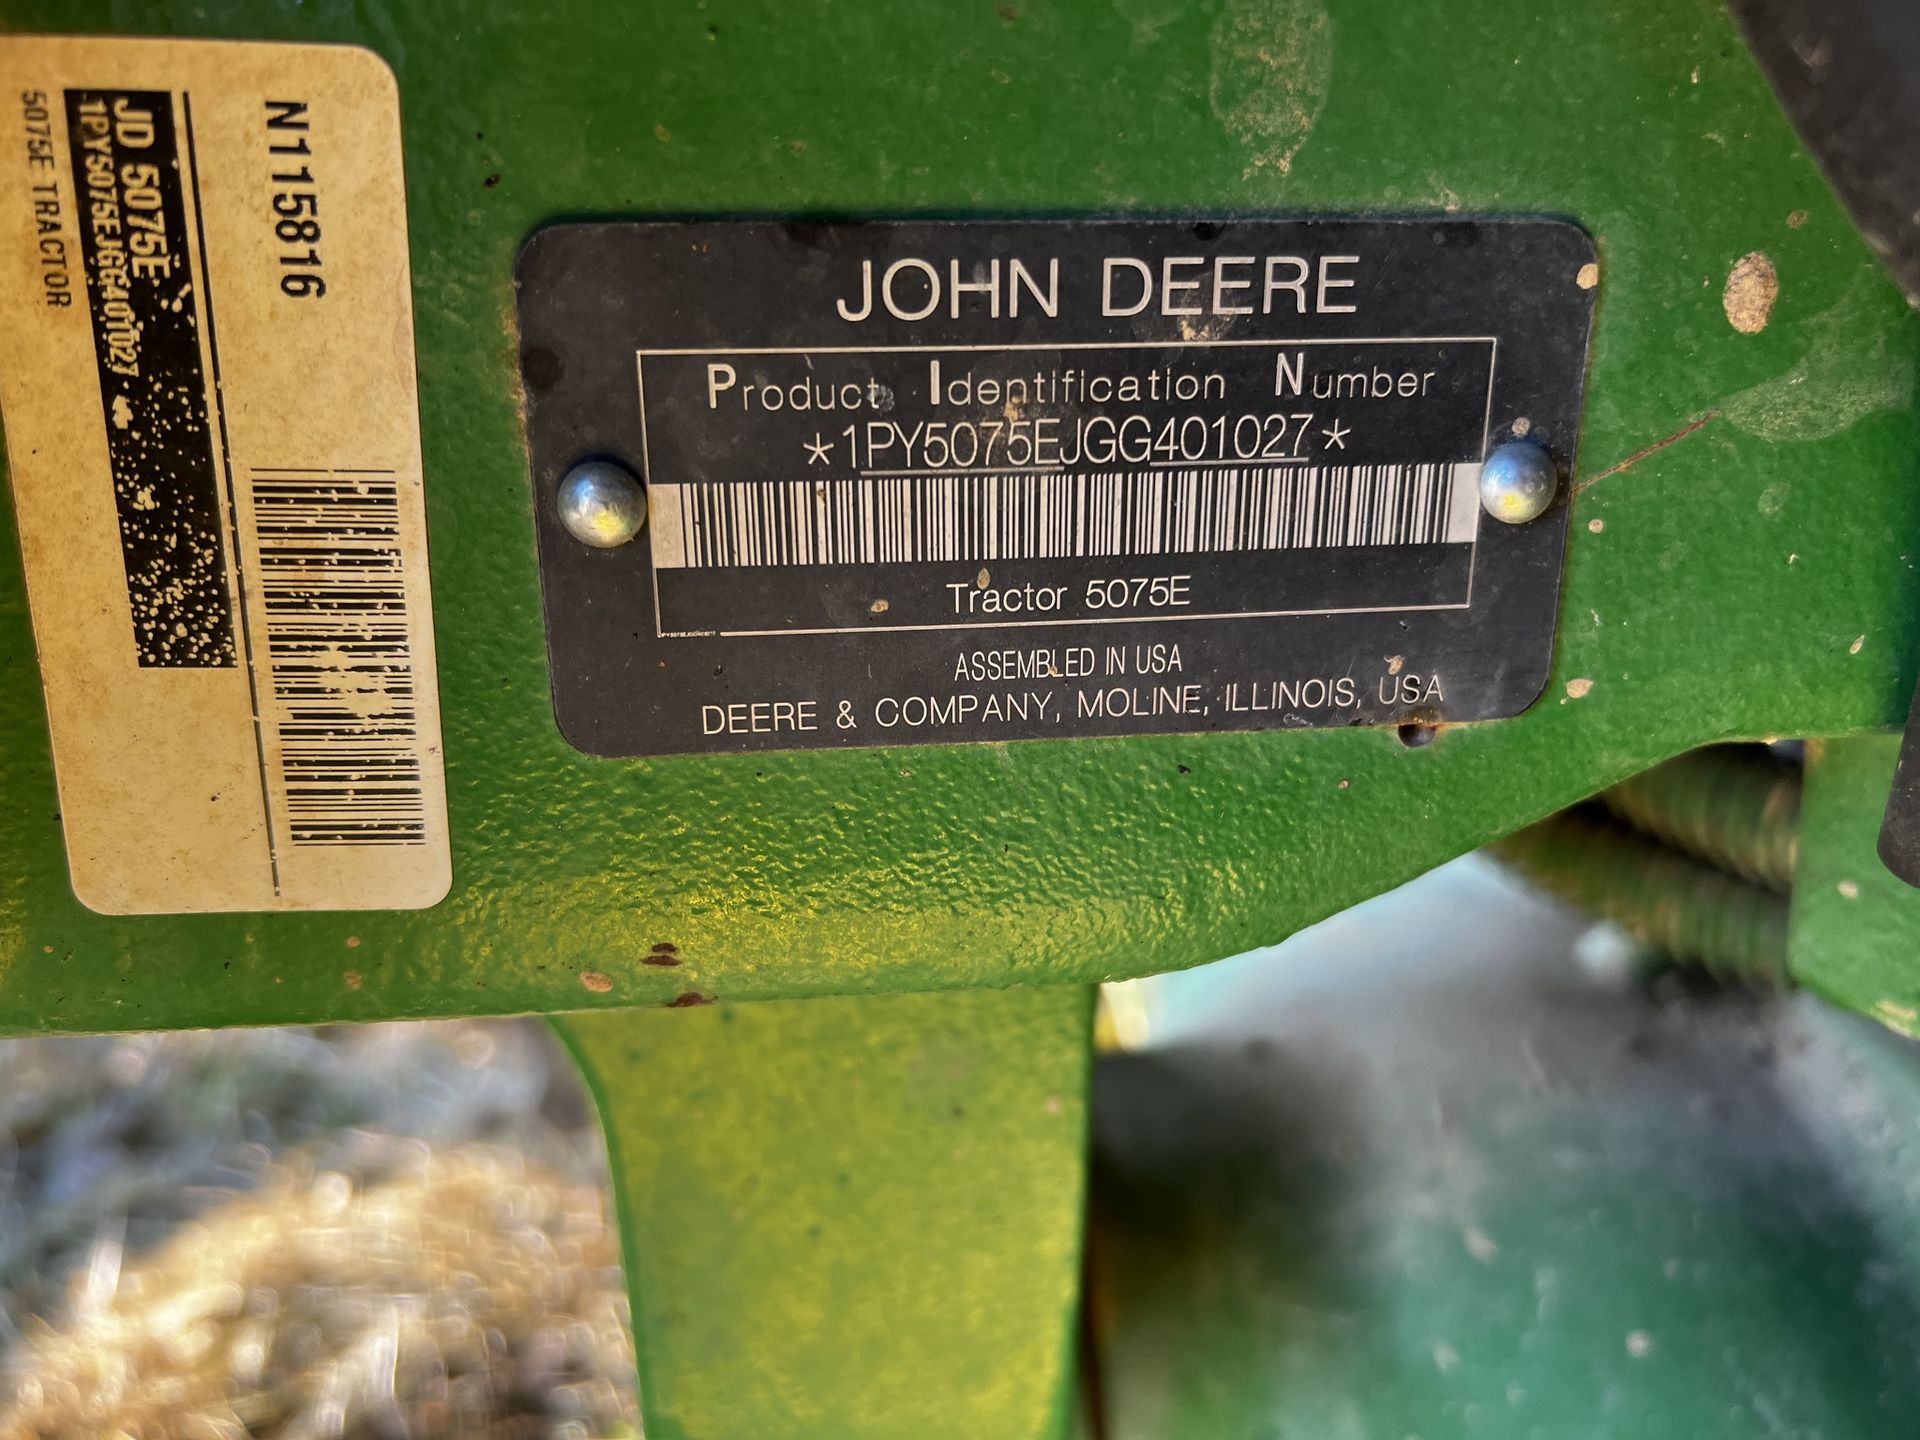 2016 John Deere 5075E